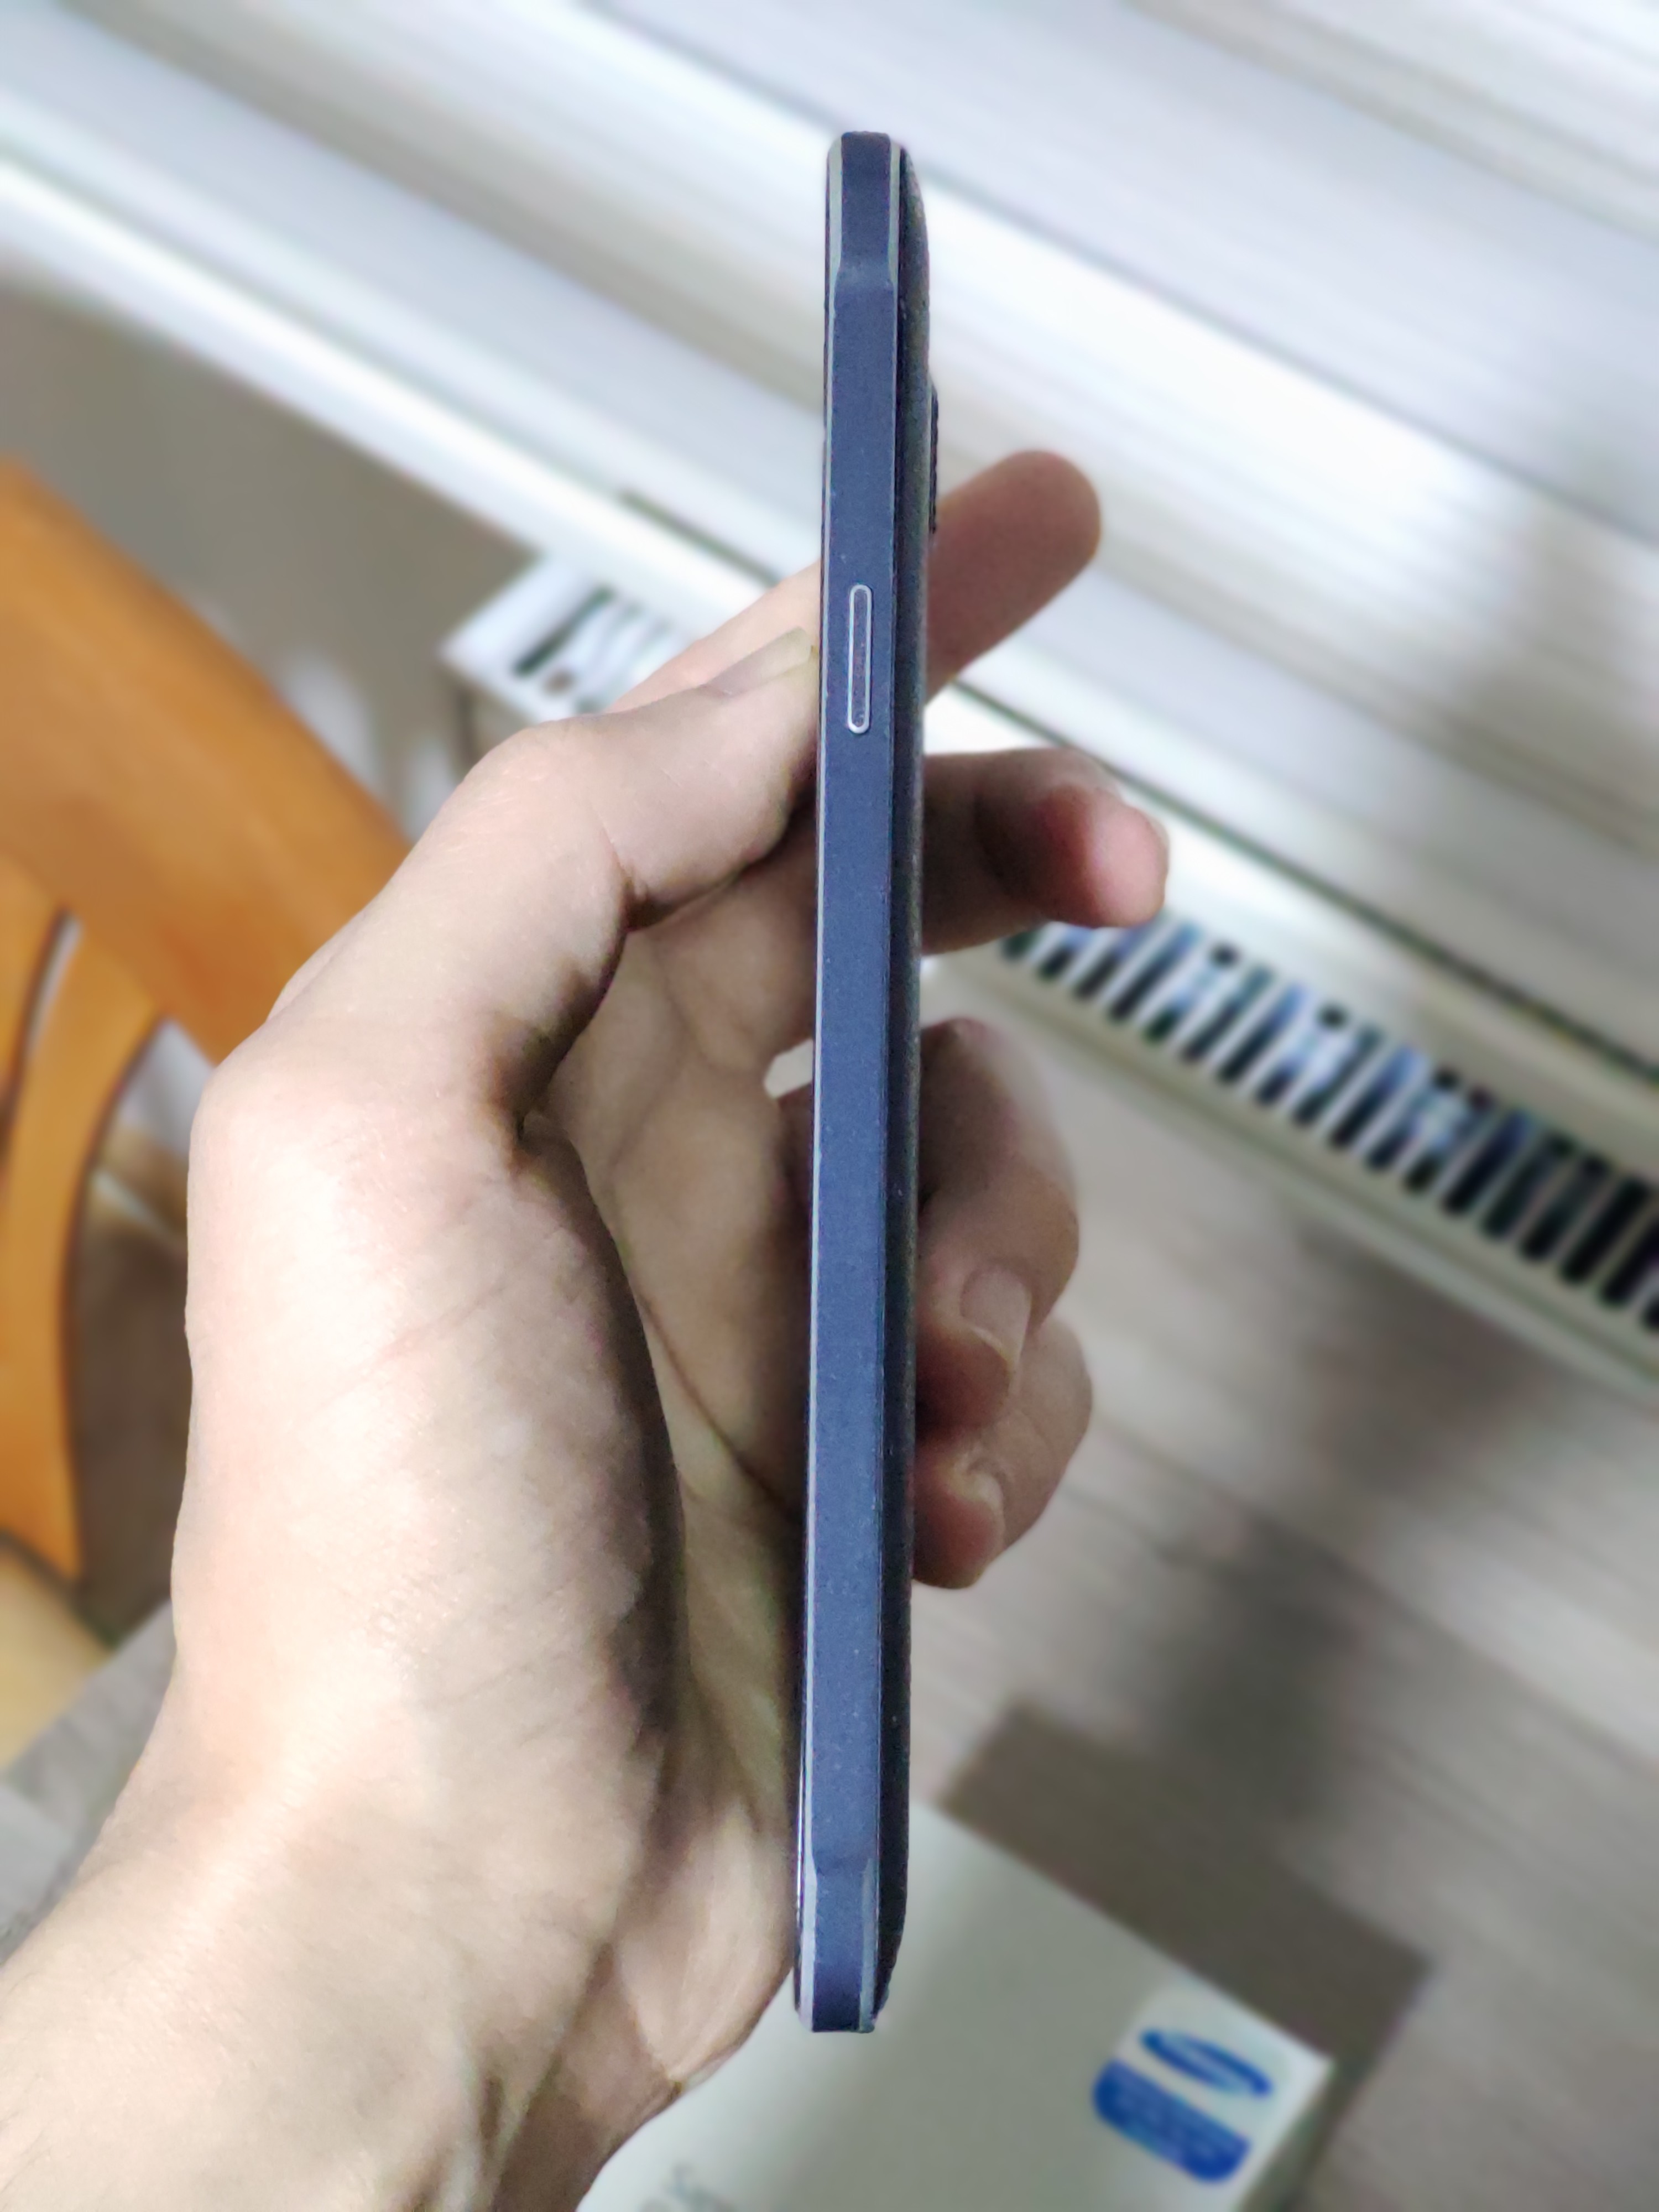 Temiz Kutulu Galaxy Note 4 Uygun Fiyata